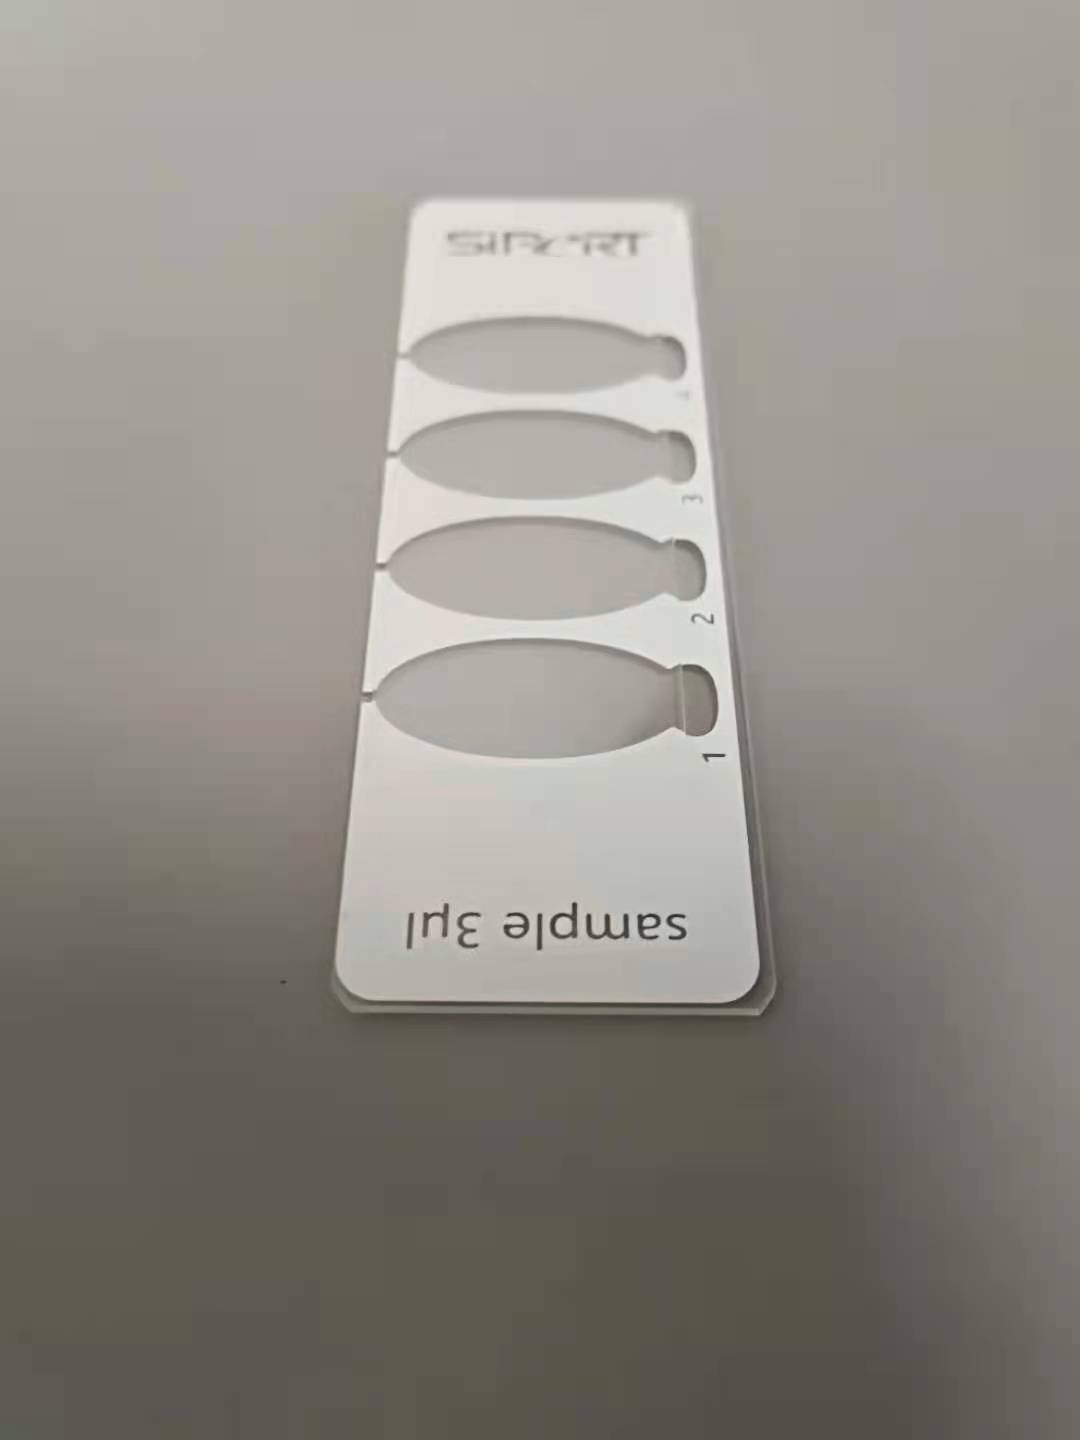 Disposable four-cavity slide